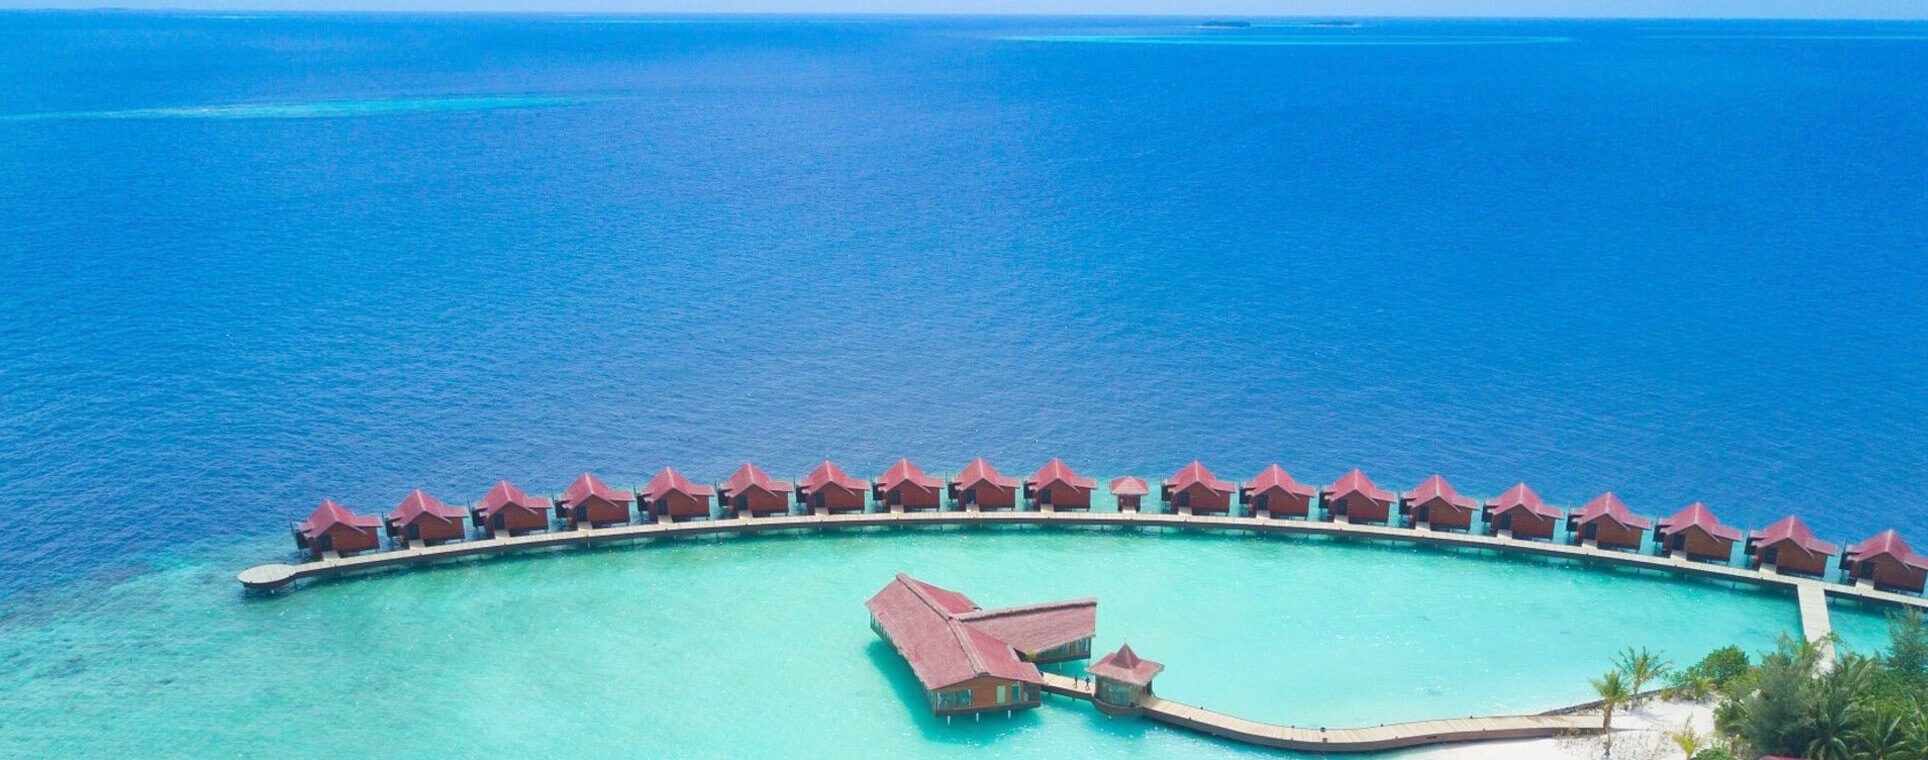 Maldives: High On The Beach Blues!